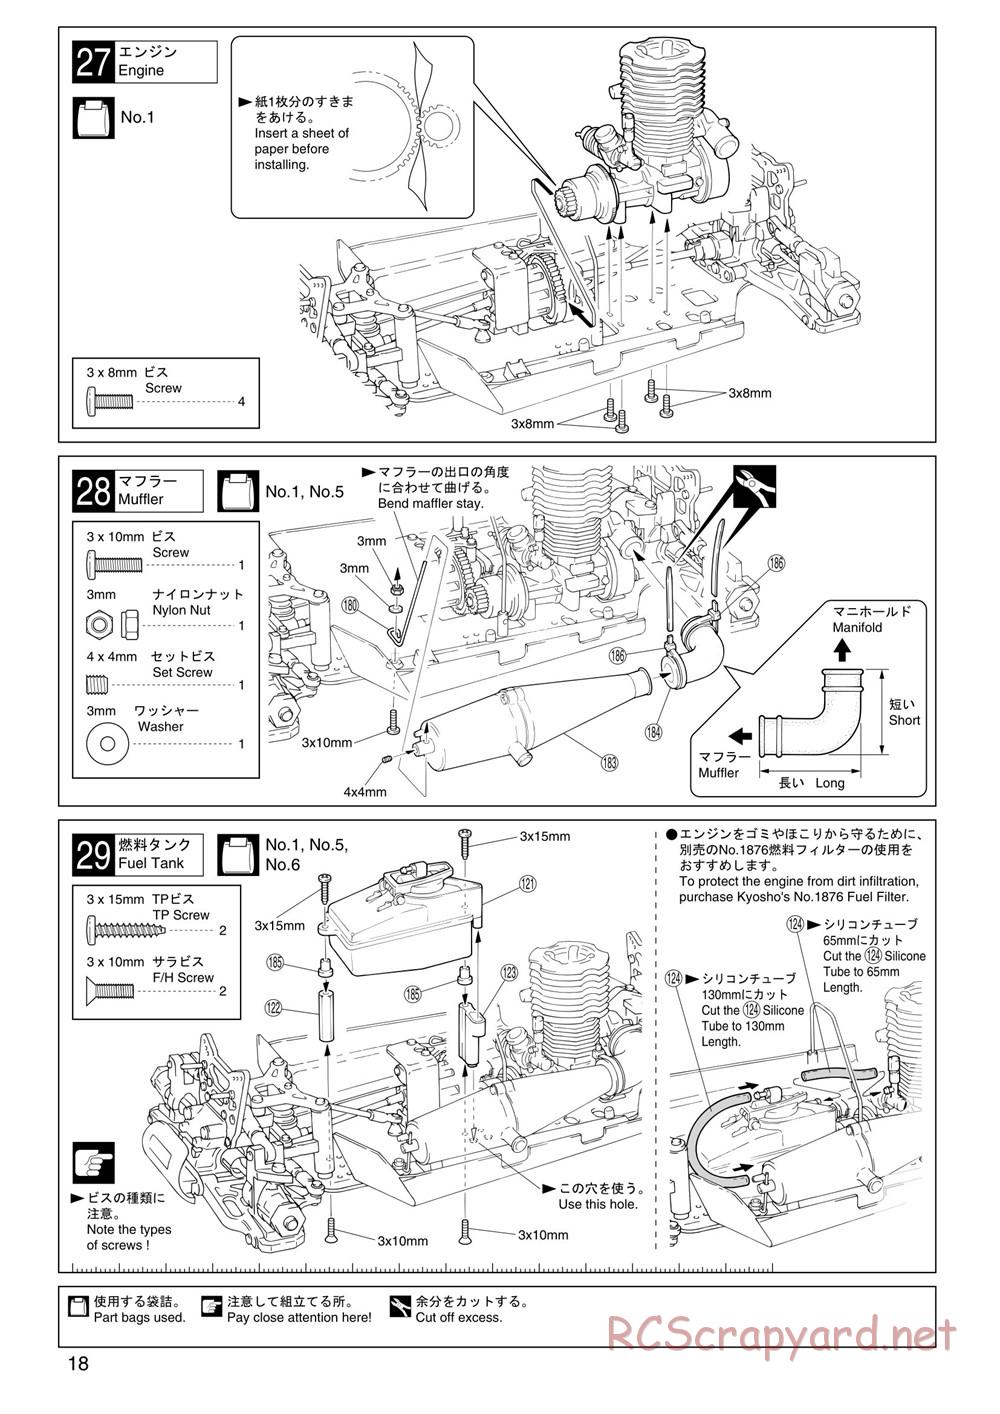 Kyosho - Super Eight GP20 Landmax 2 - Manual - Page 18